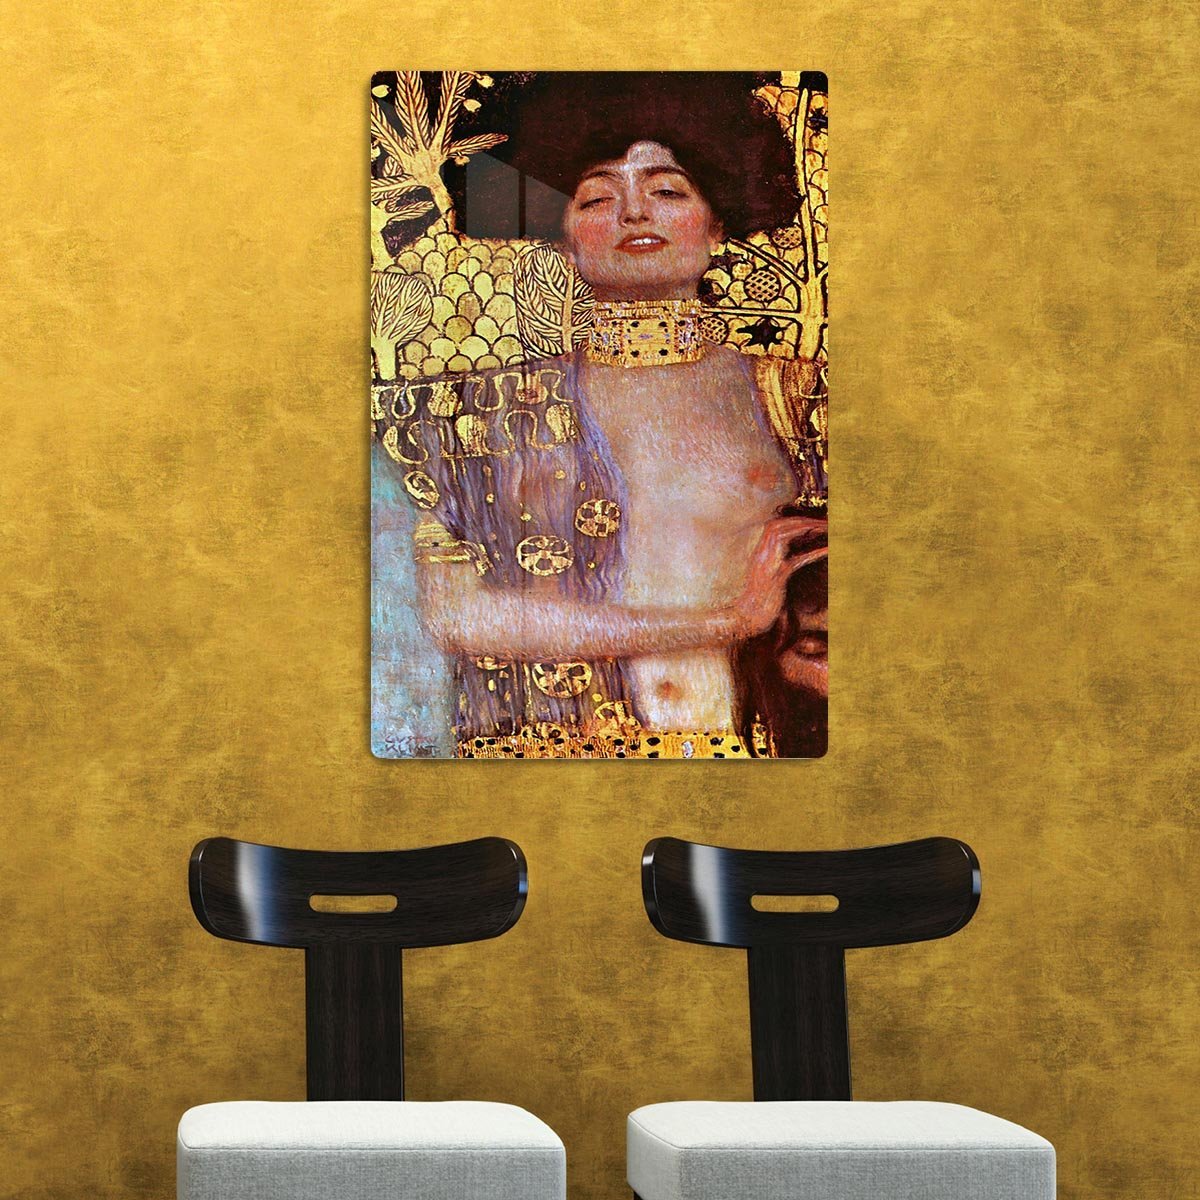 Judith by Klimt HD Metal Print